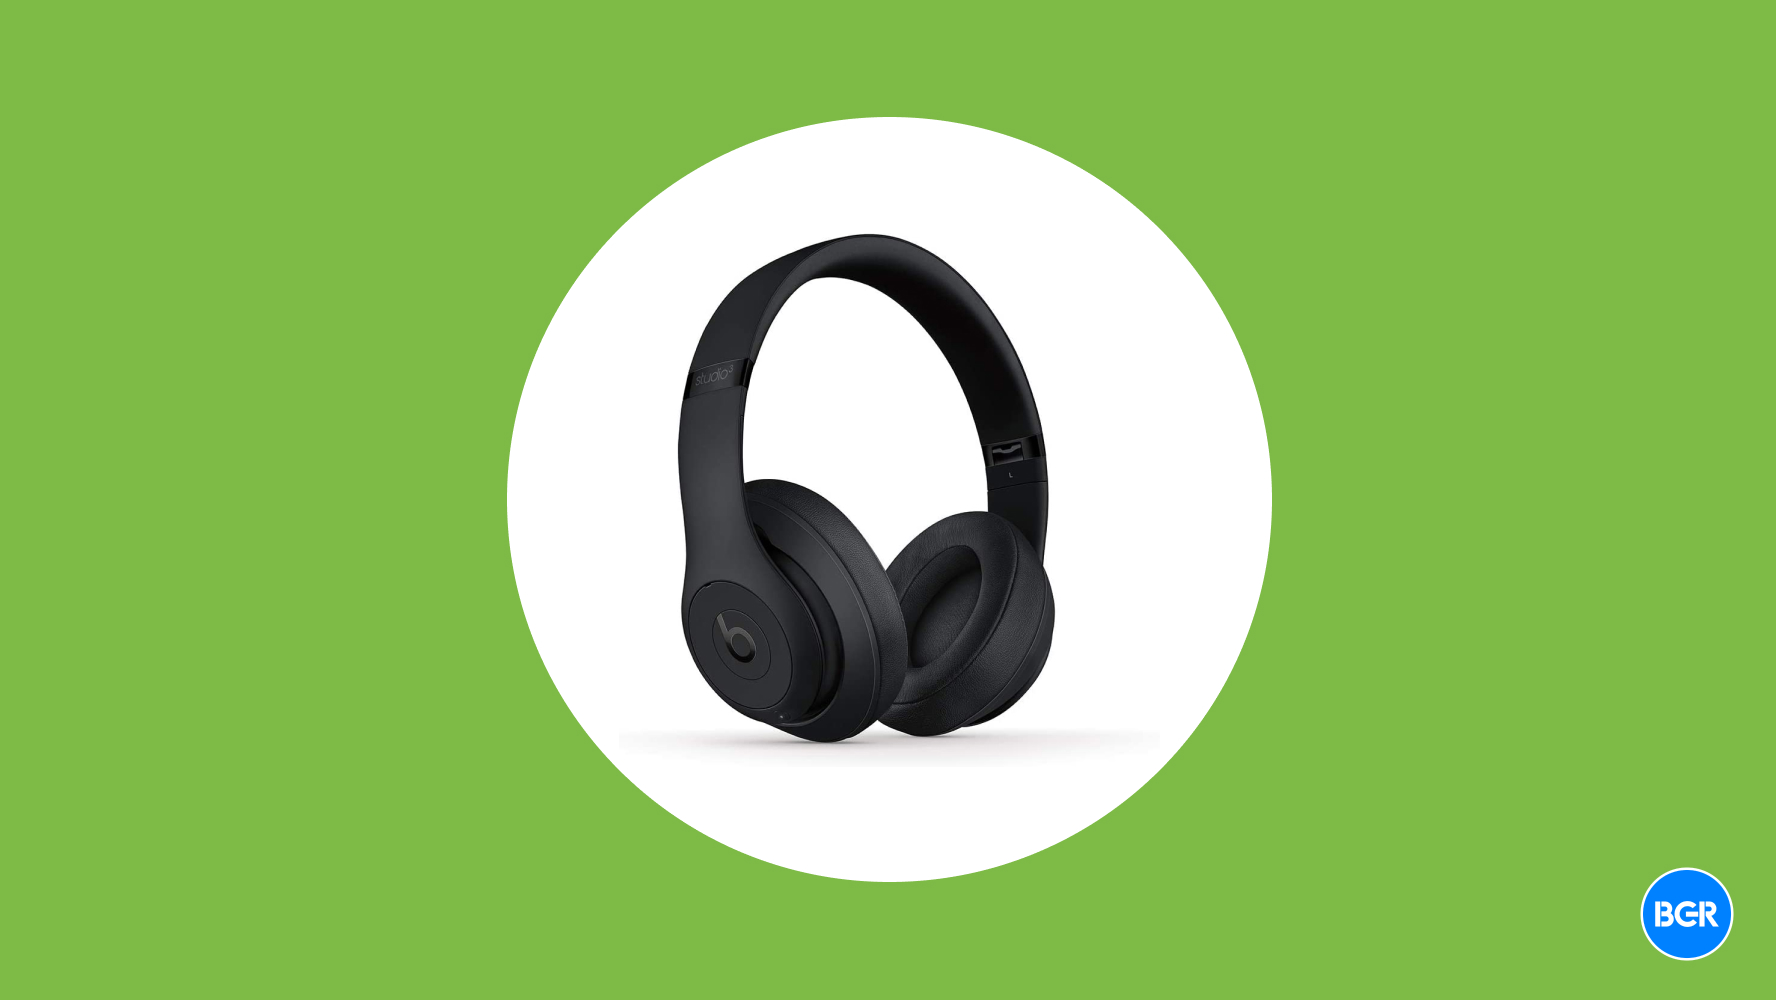 Apple’s Beats Studio3 headphones are 52% off at $169